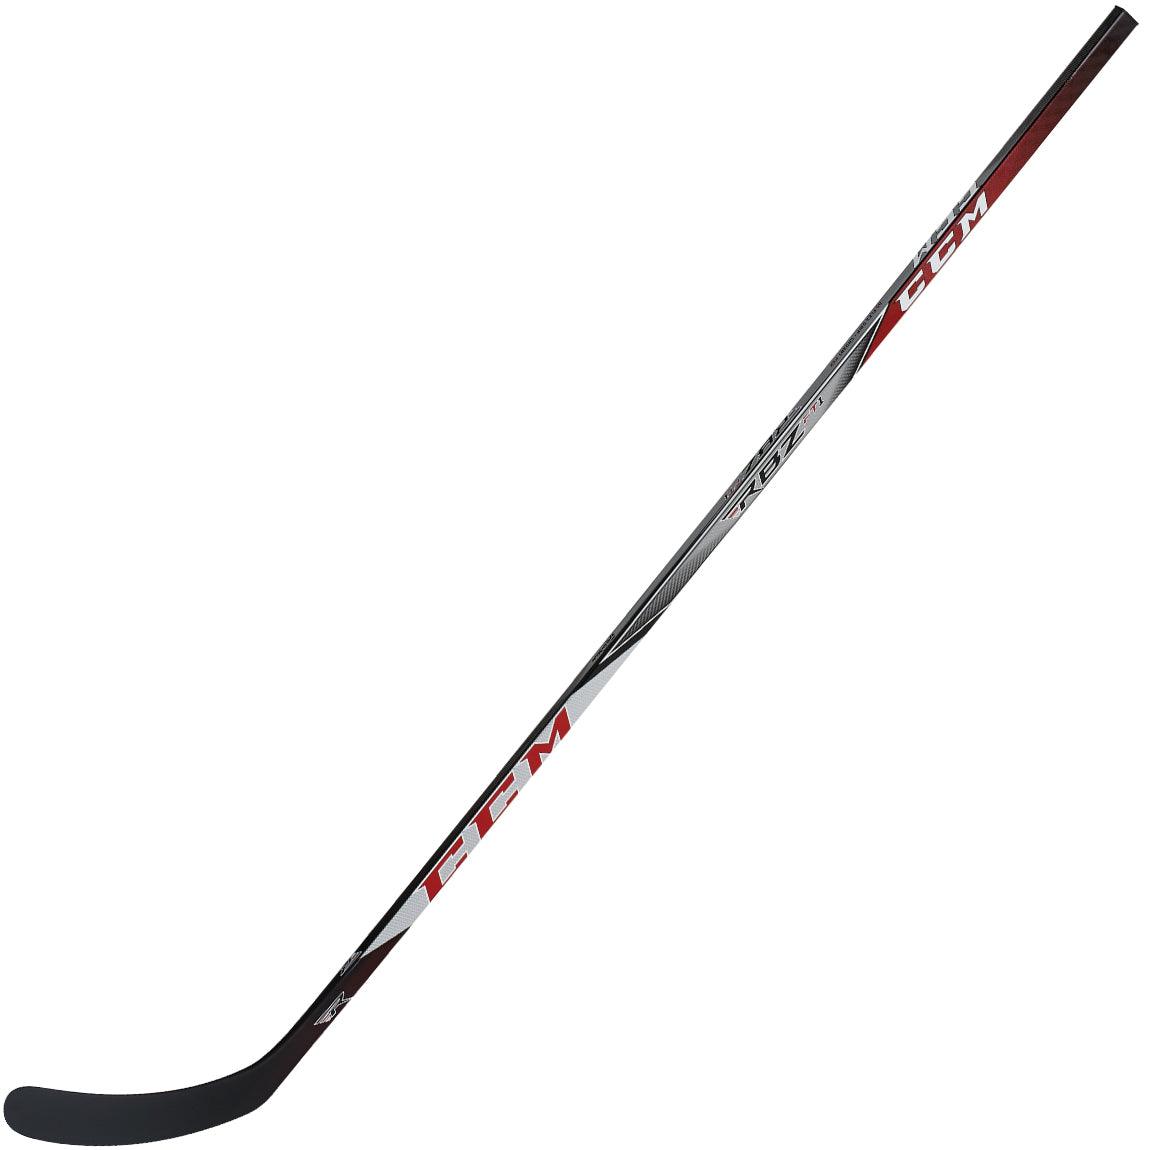 RBZ FT1 Hockey Stick - Junior - Sports Excellence